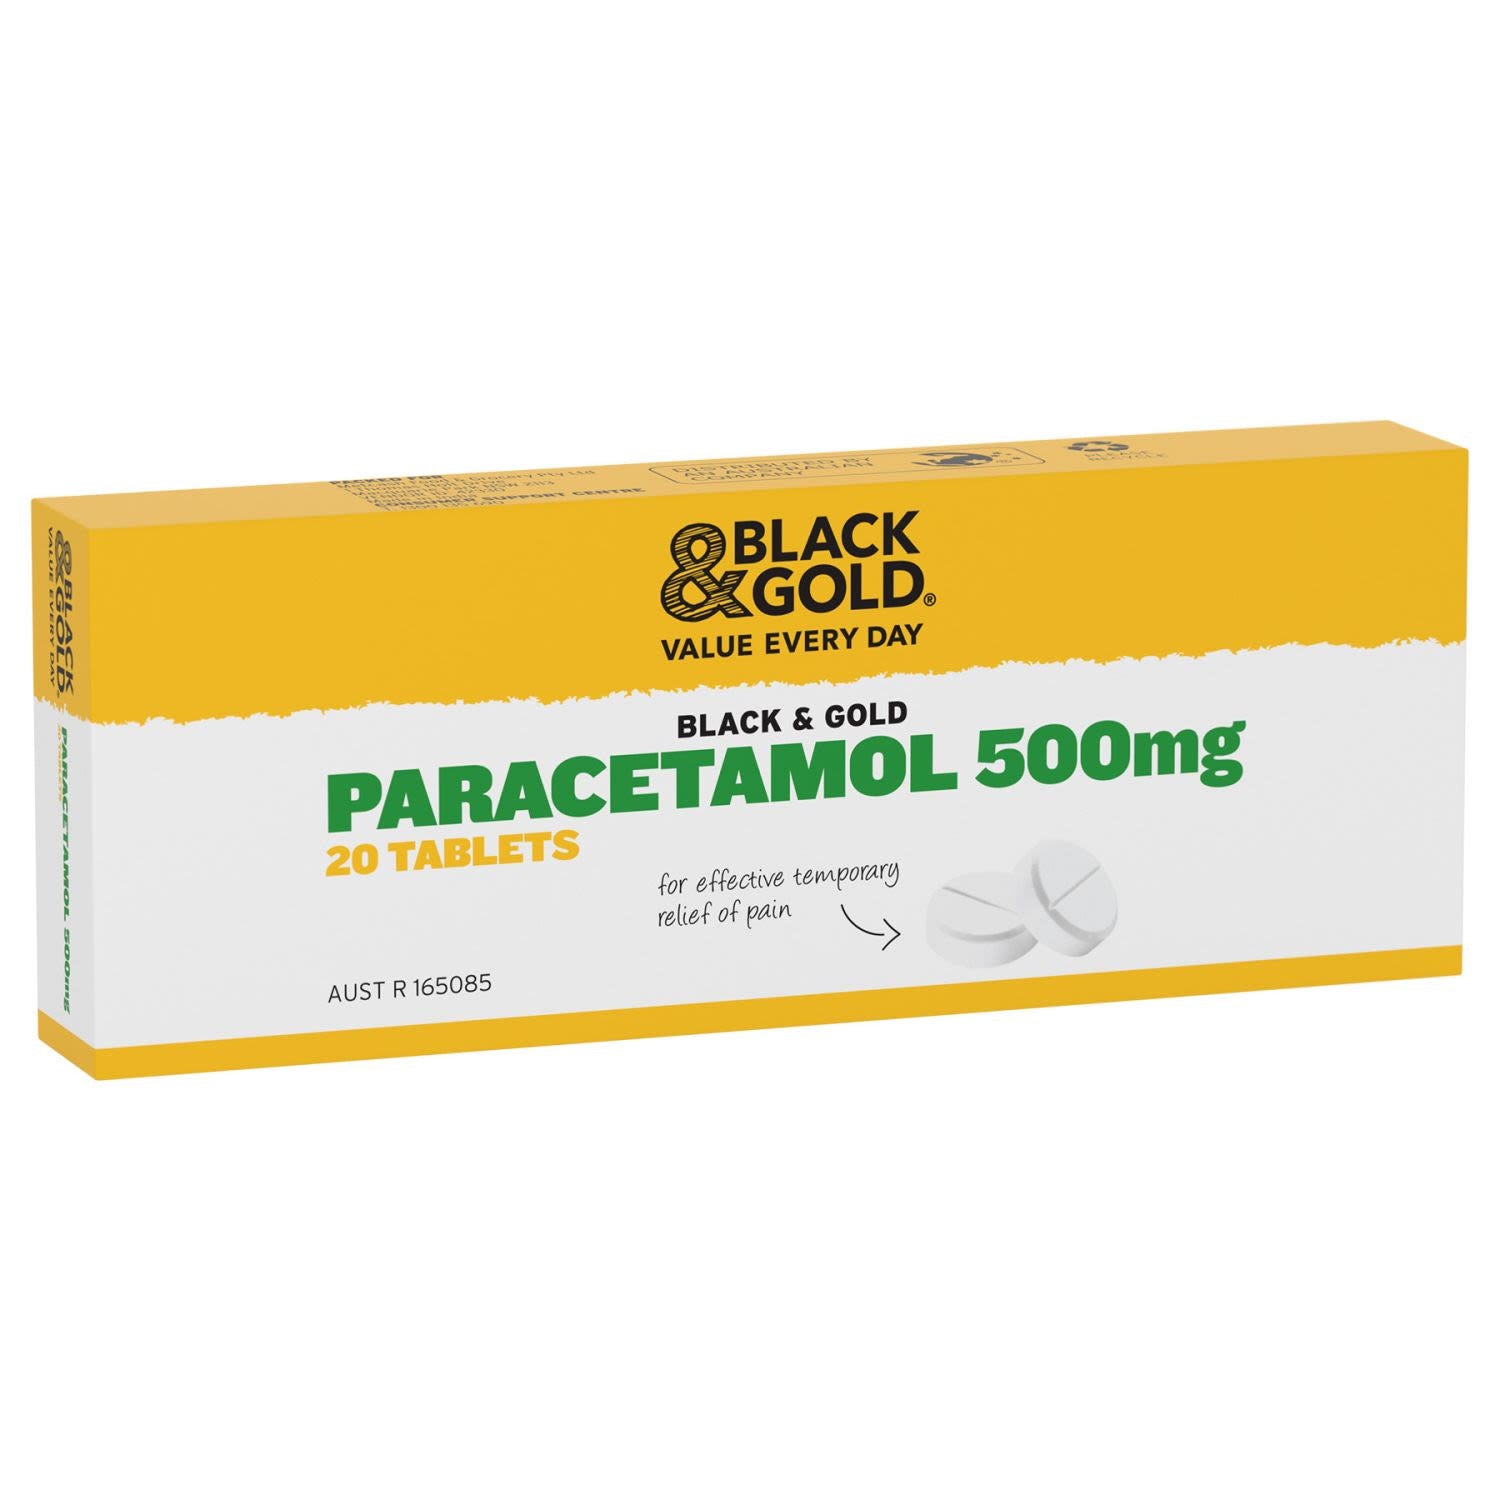 Black & Gold Paracetamol 500mg Tablets 20pk